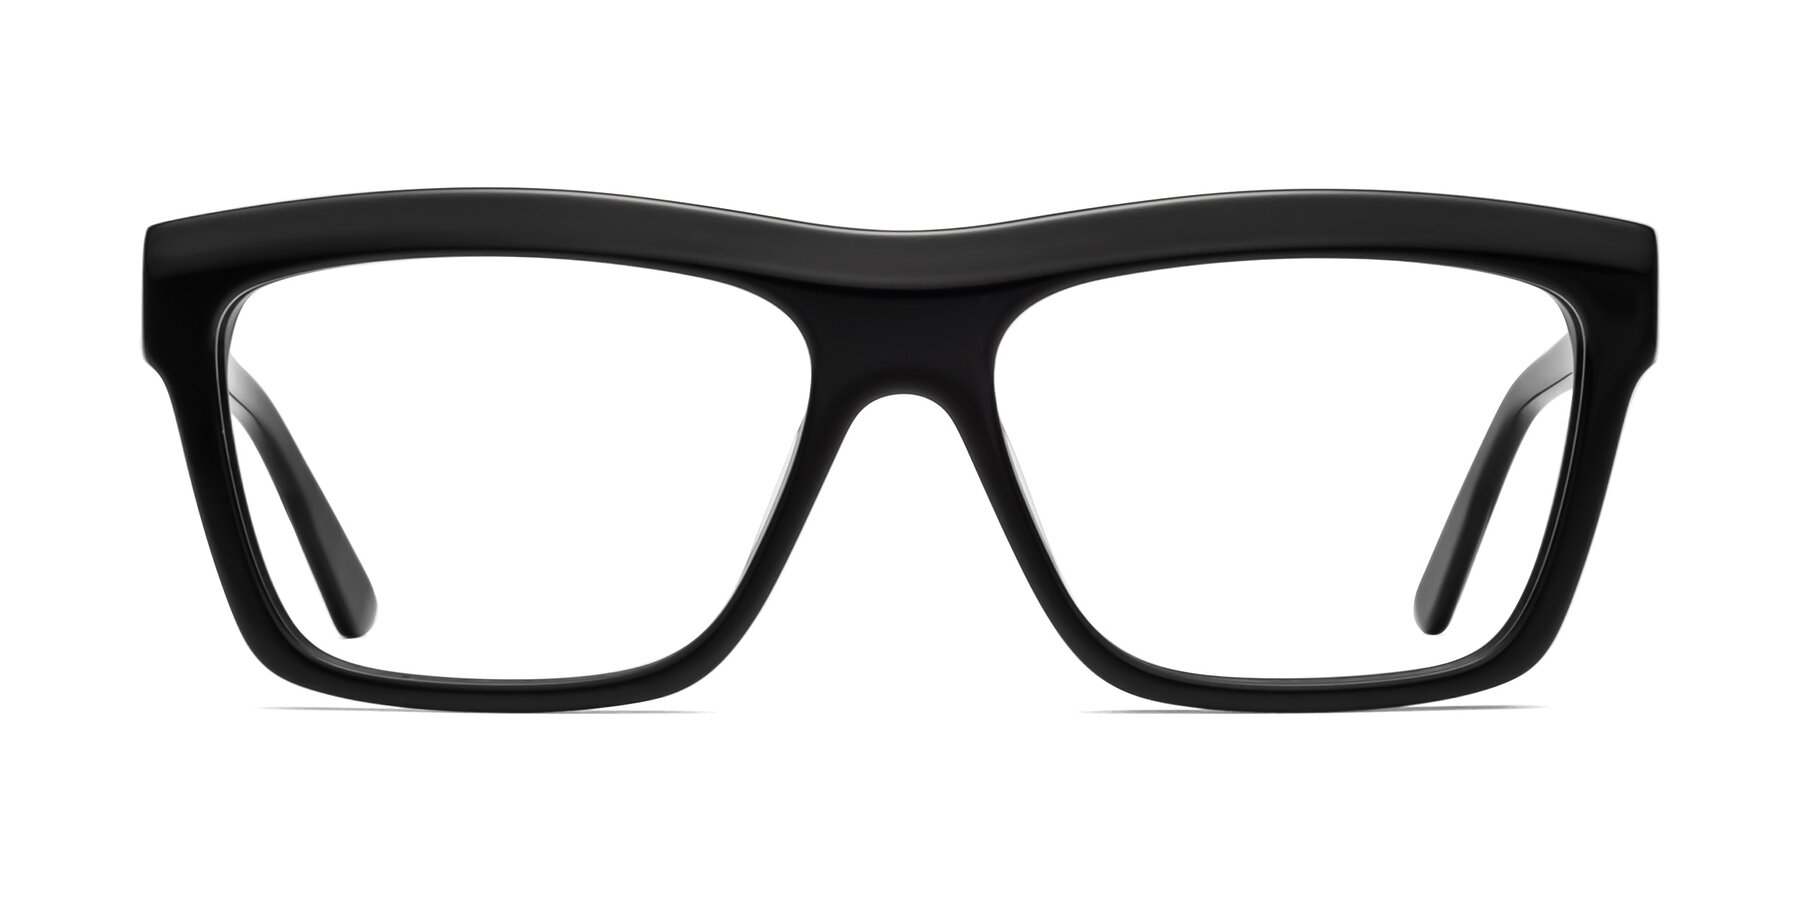 1481 - Black Sunglasses Frame